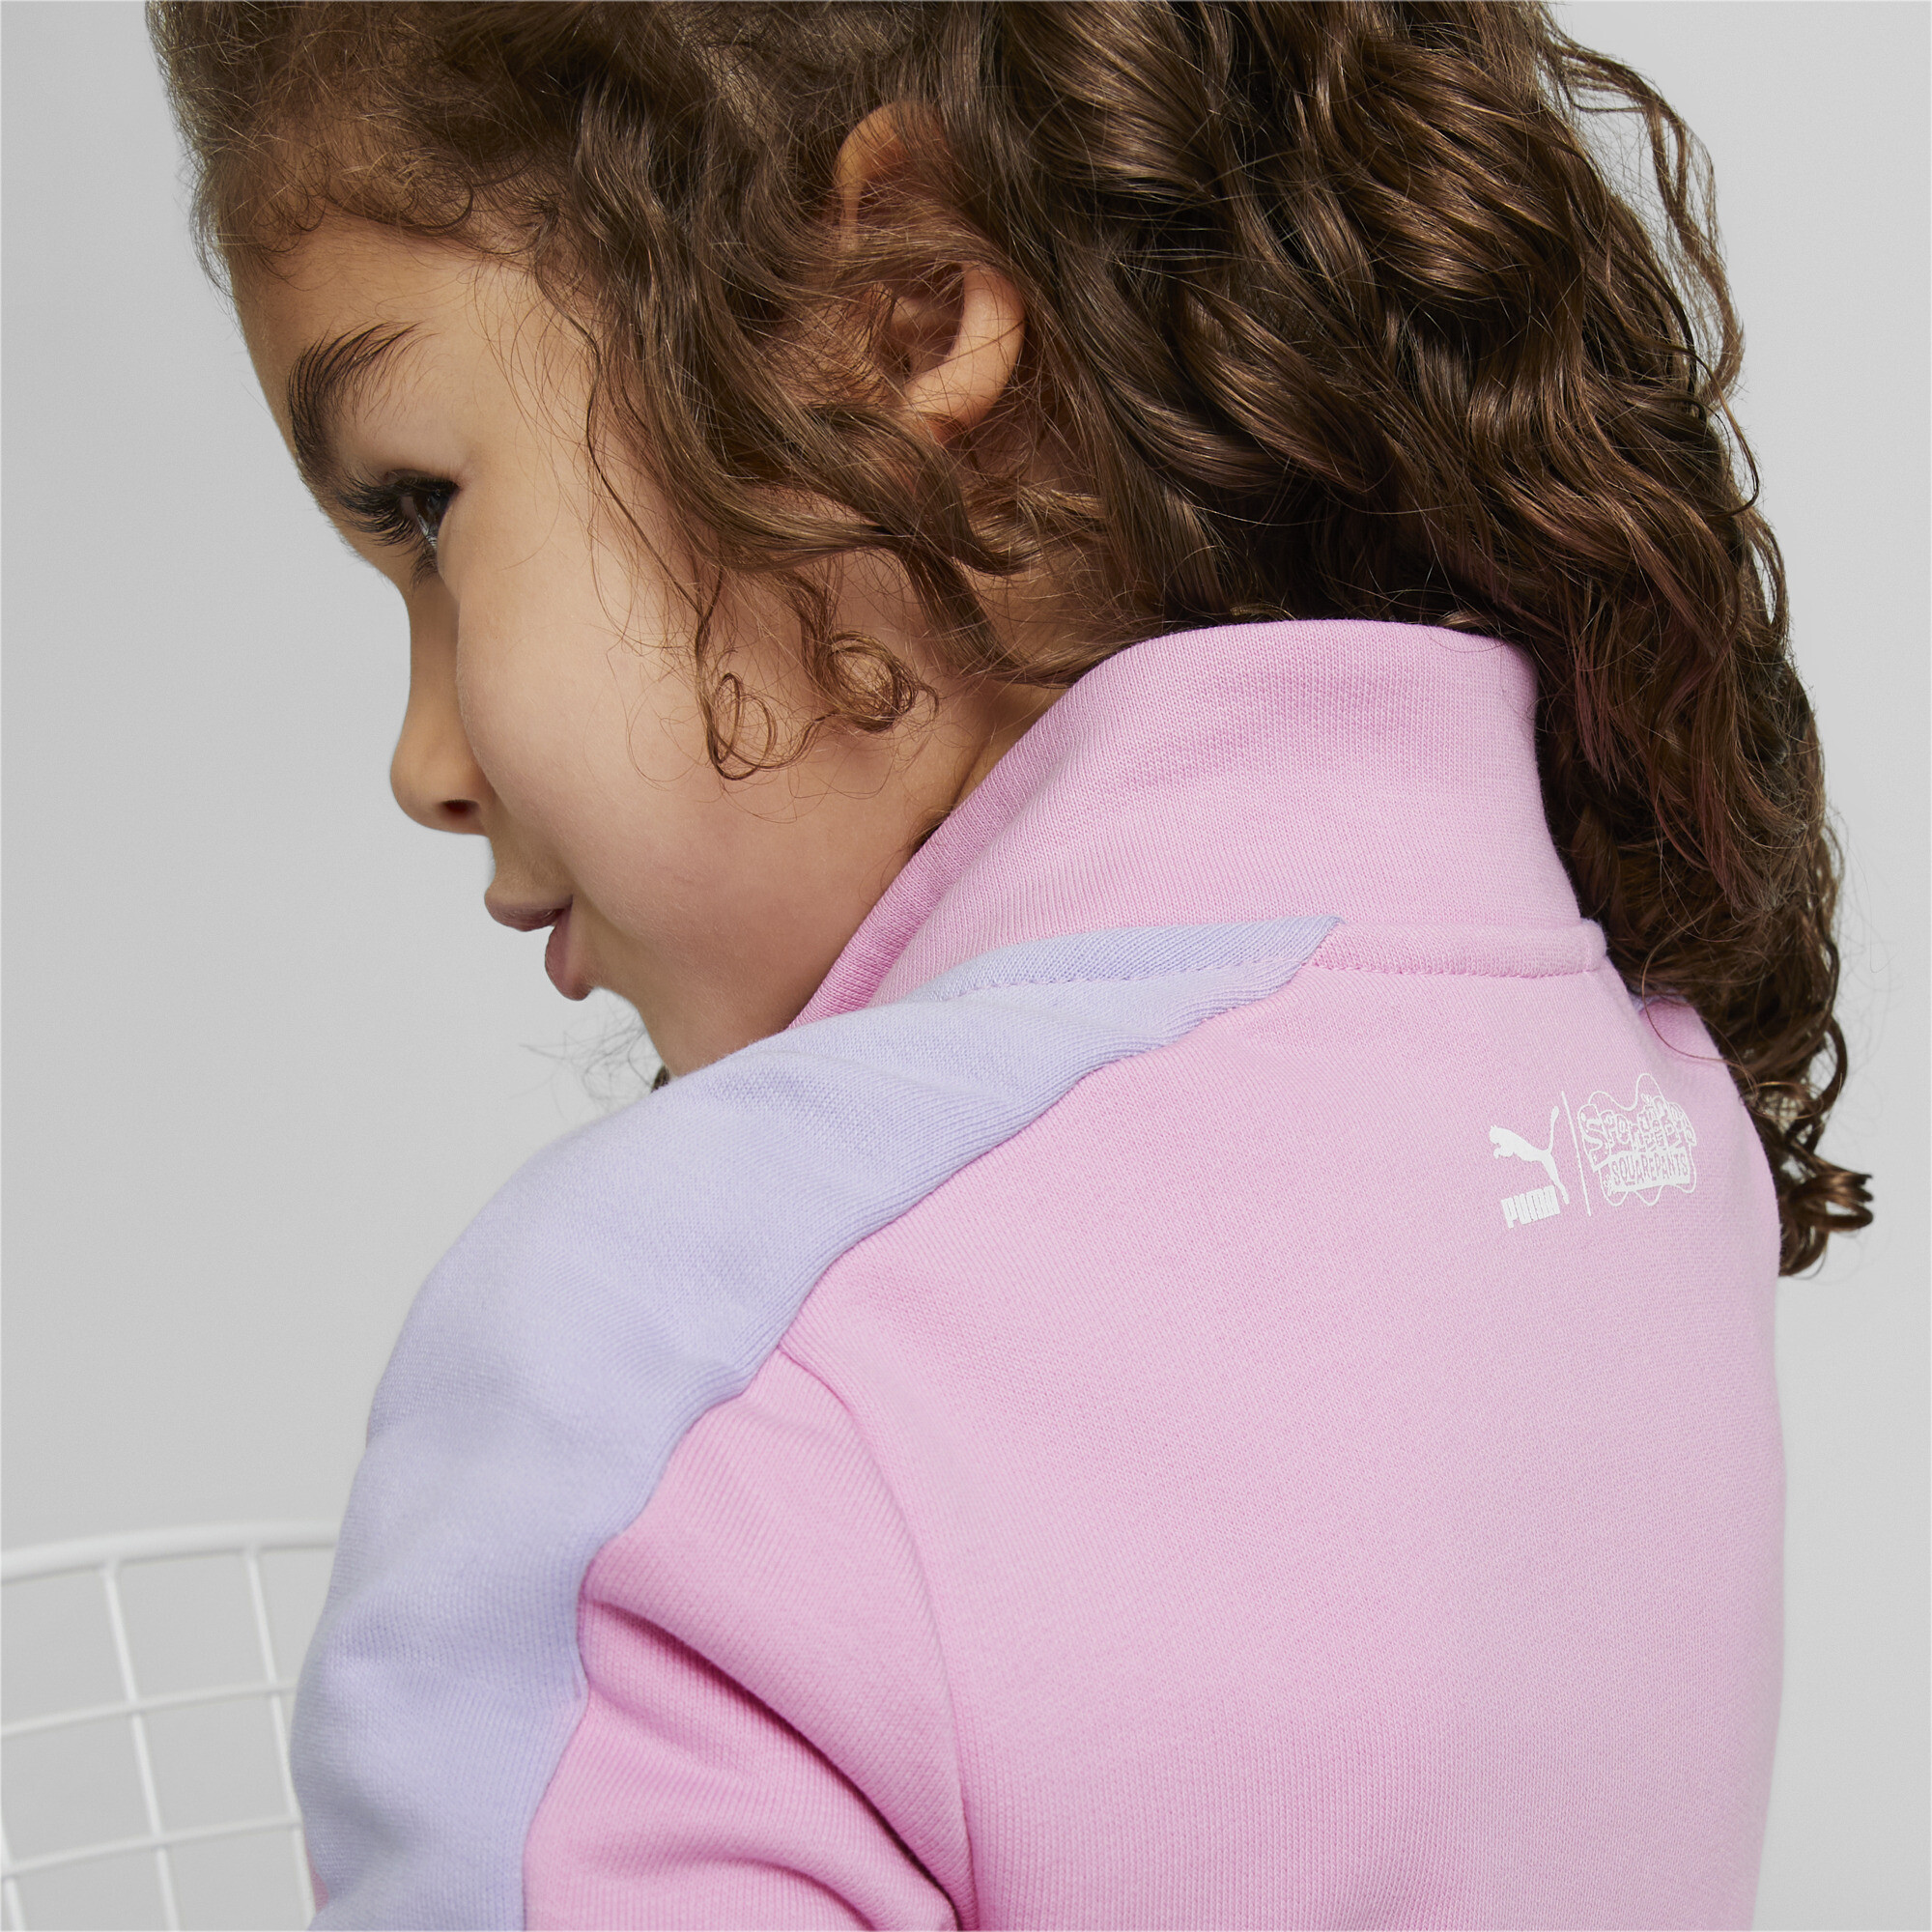 PUMA X SPONGEBOB T7 Jacket Kids In Pink, Size 3-4 Youth